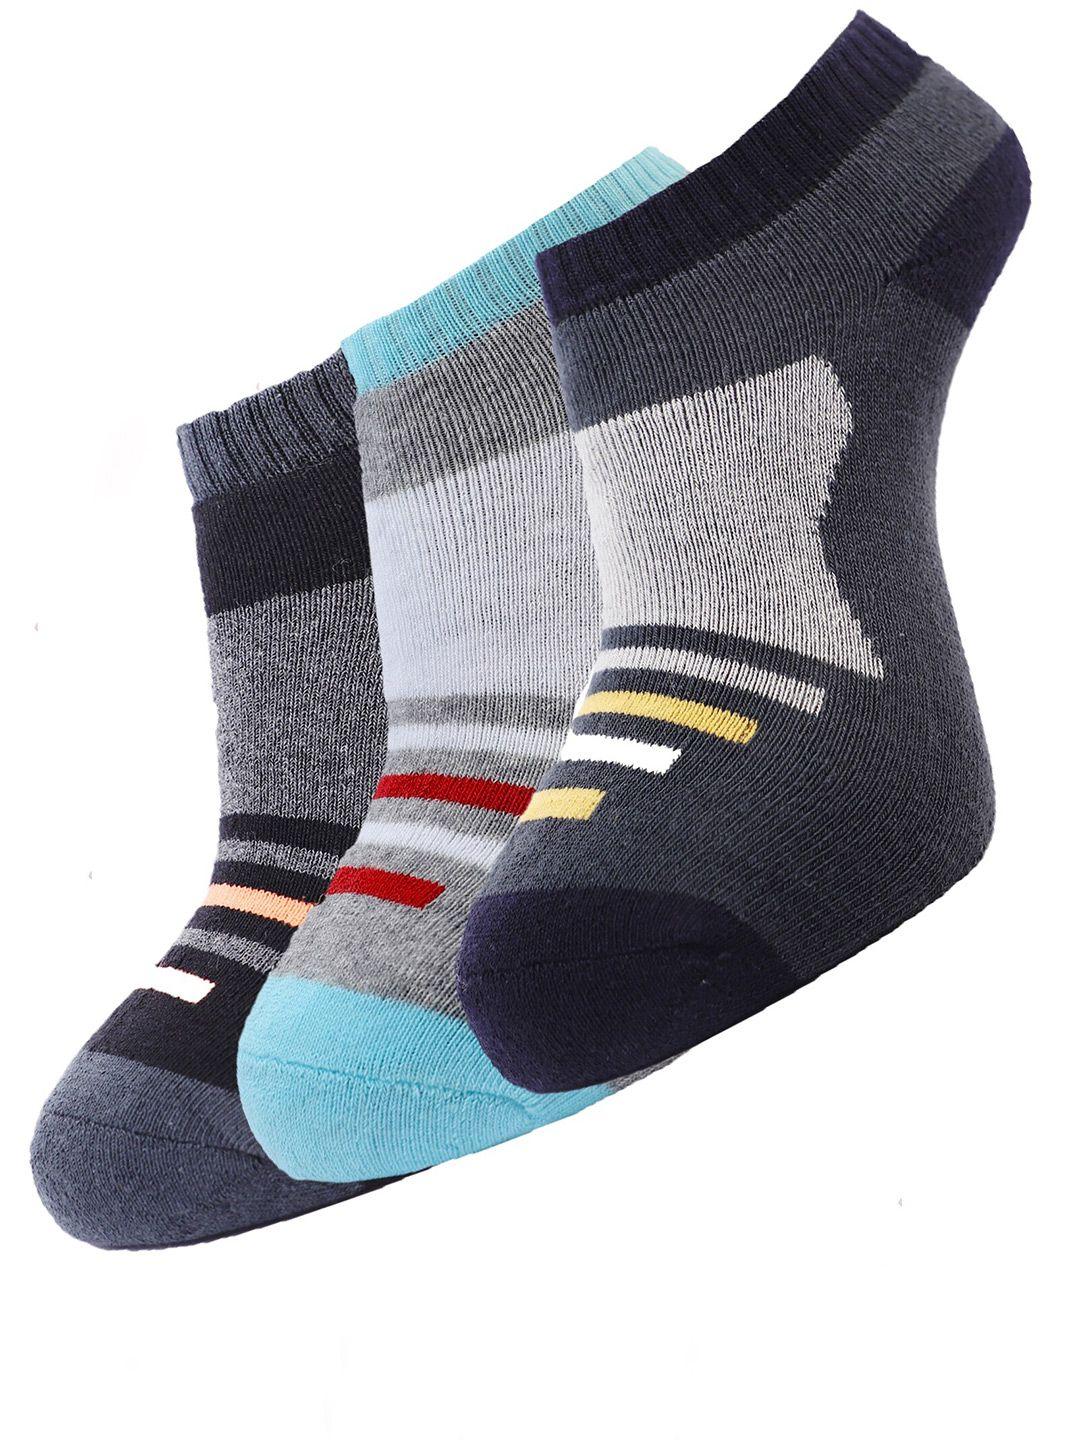 dollar socks men pack of 3 assorted patterned cotton ankle length socks